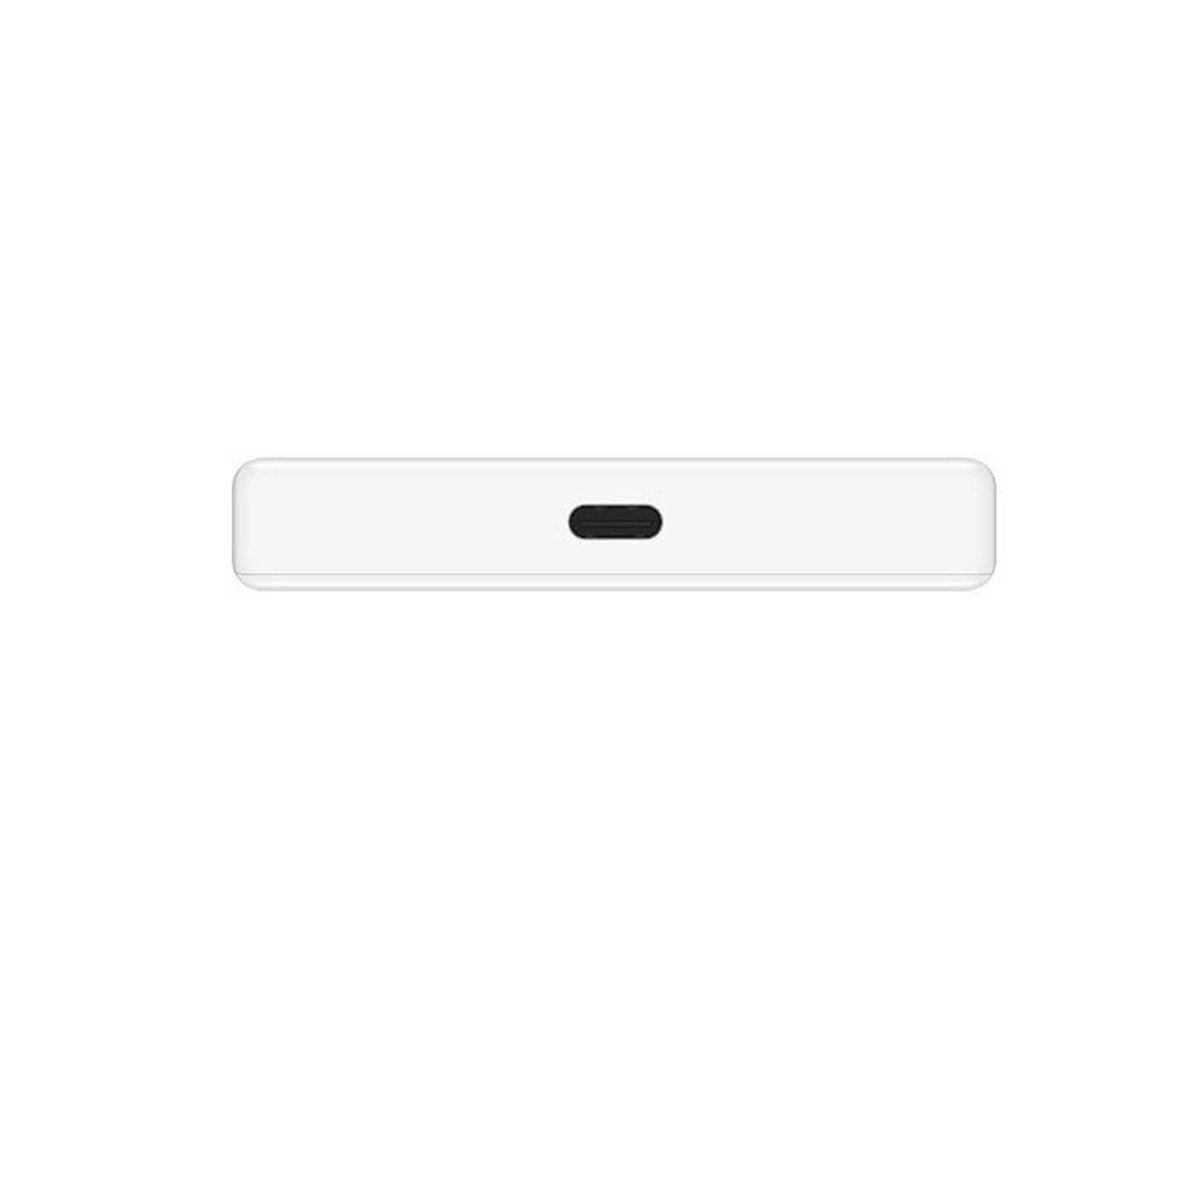 Huawei 5G Portable Router E6878-870,White